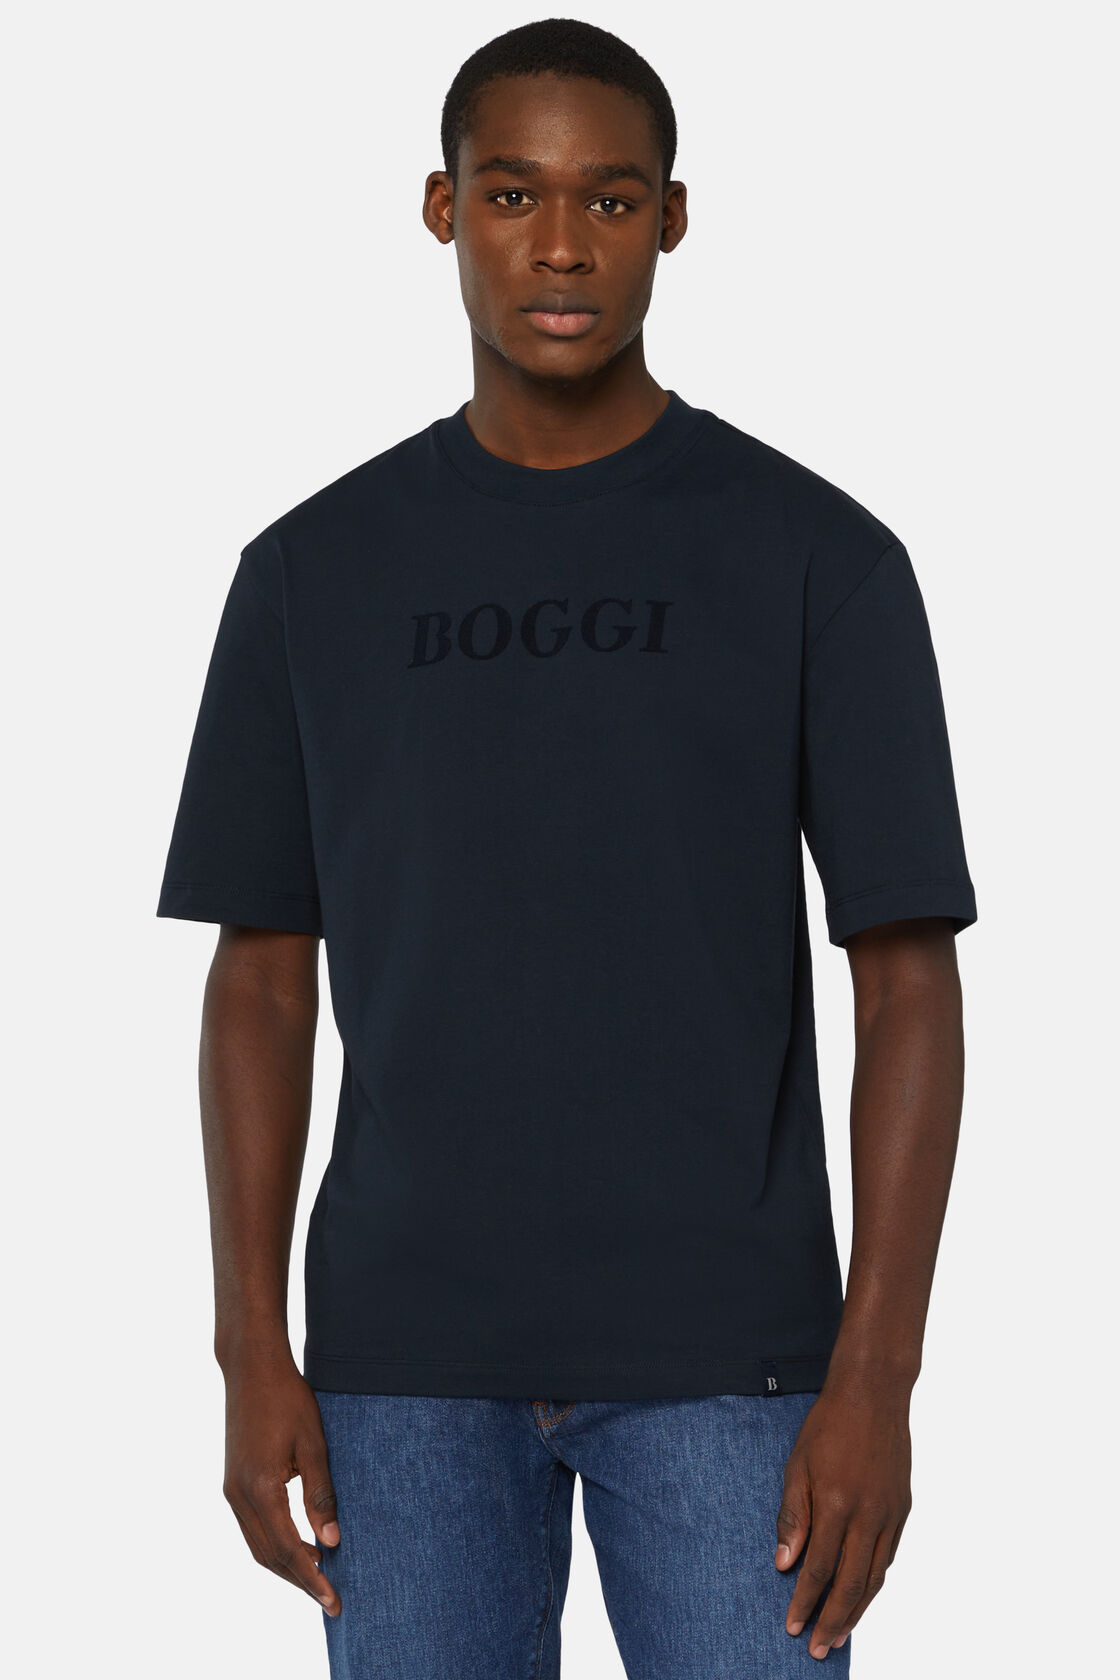 Camiseta De Algodón, Azul  Marino, hi-res